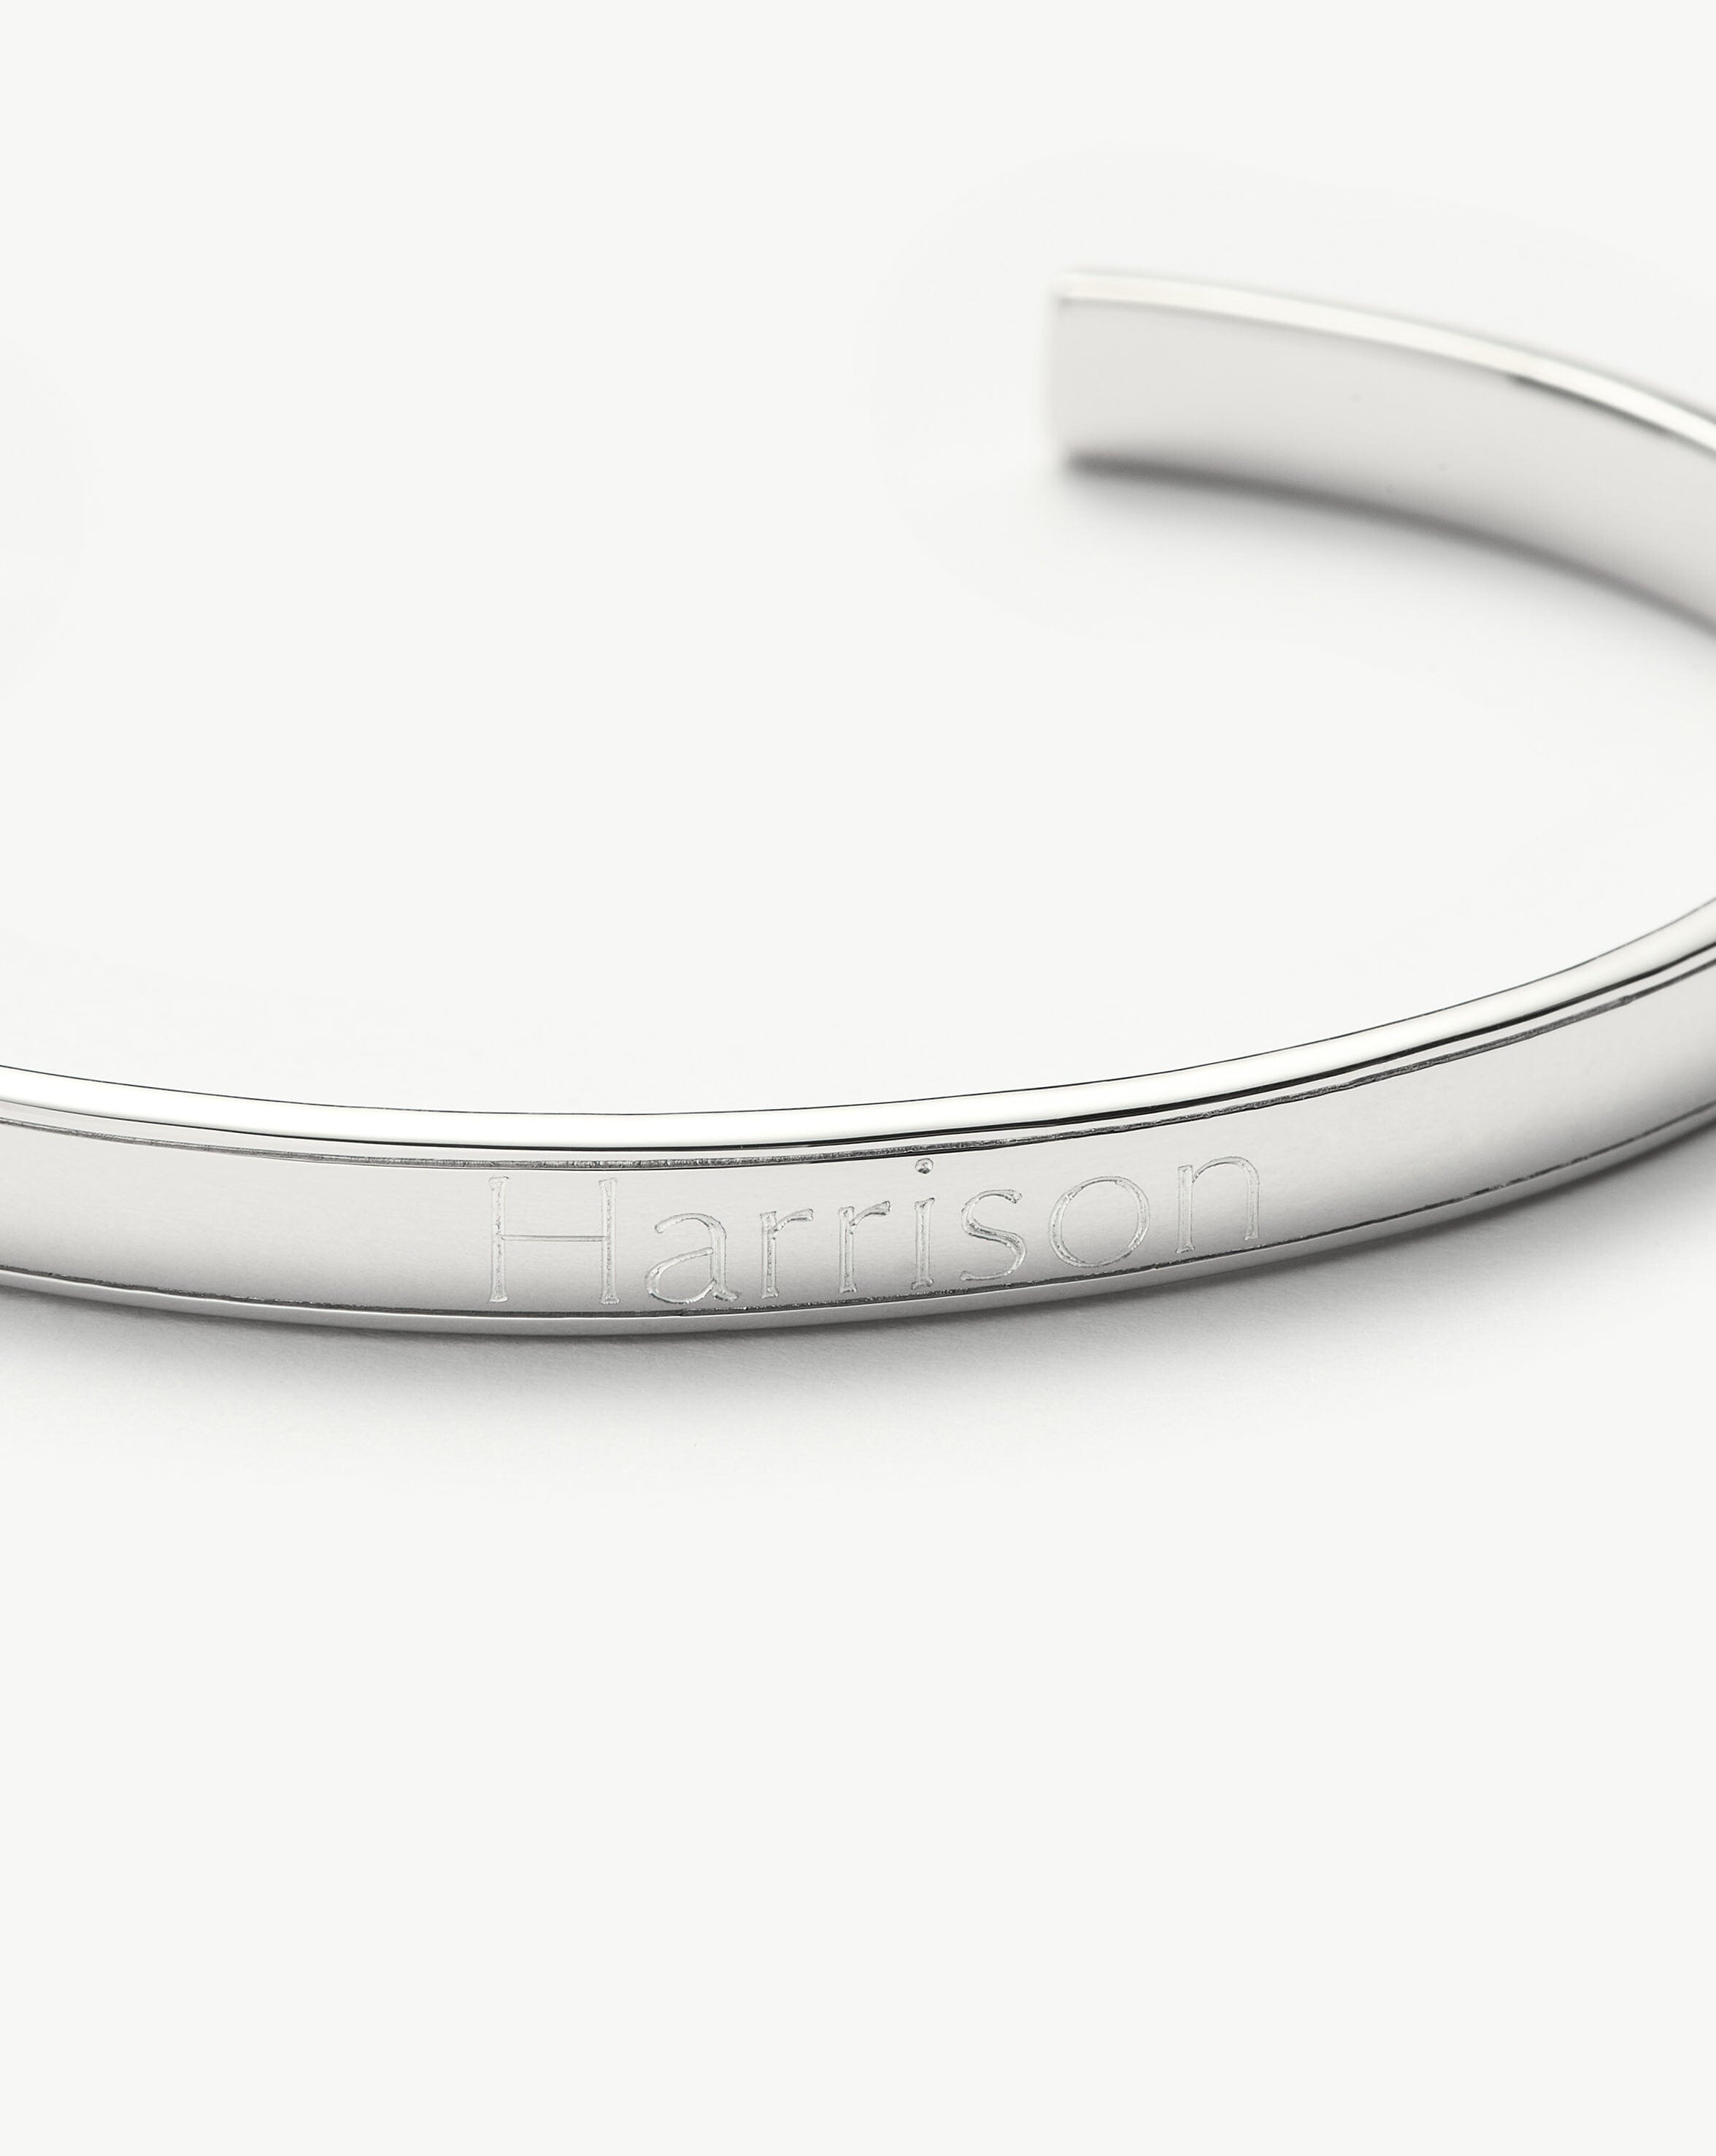 Silver Charm Bracelet Women | Stylish and Personalized Silver Bracelets for  Ladies – NEMICHAND JEWELS